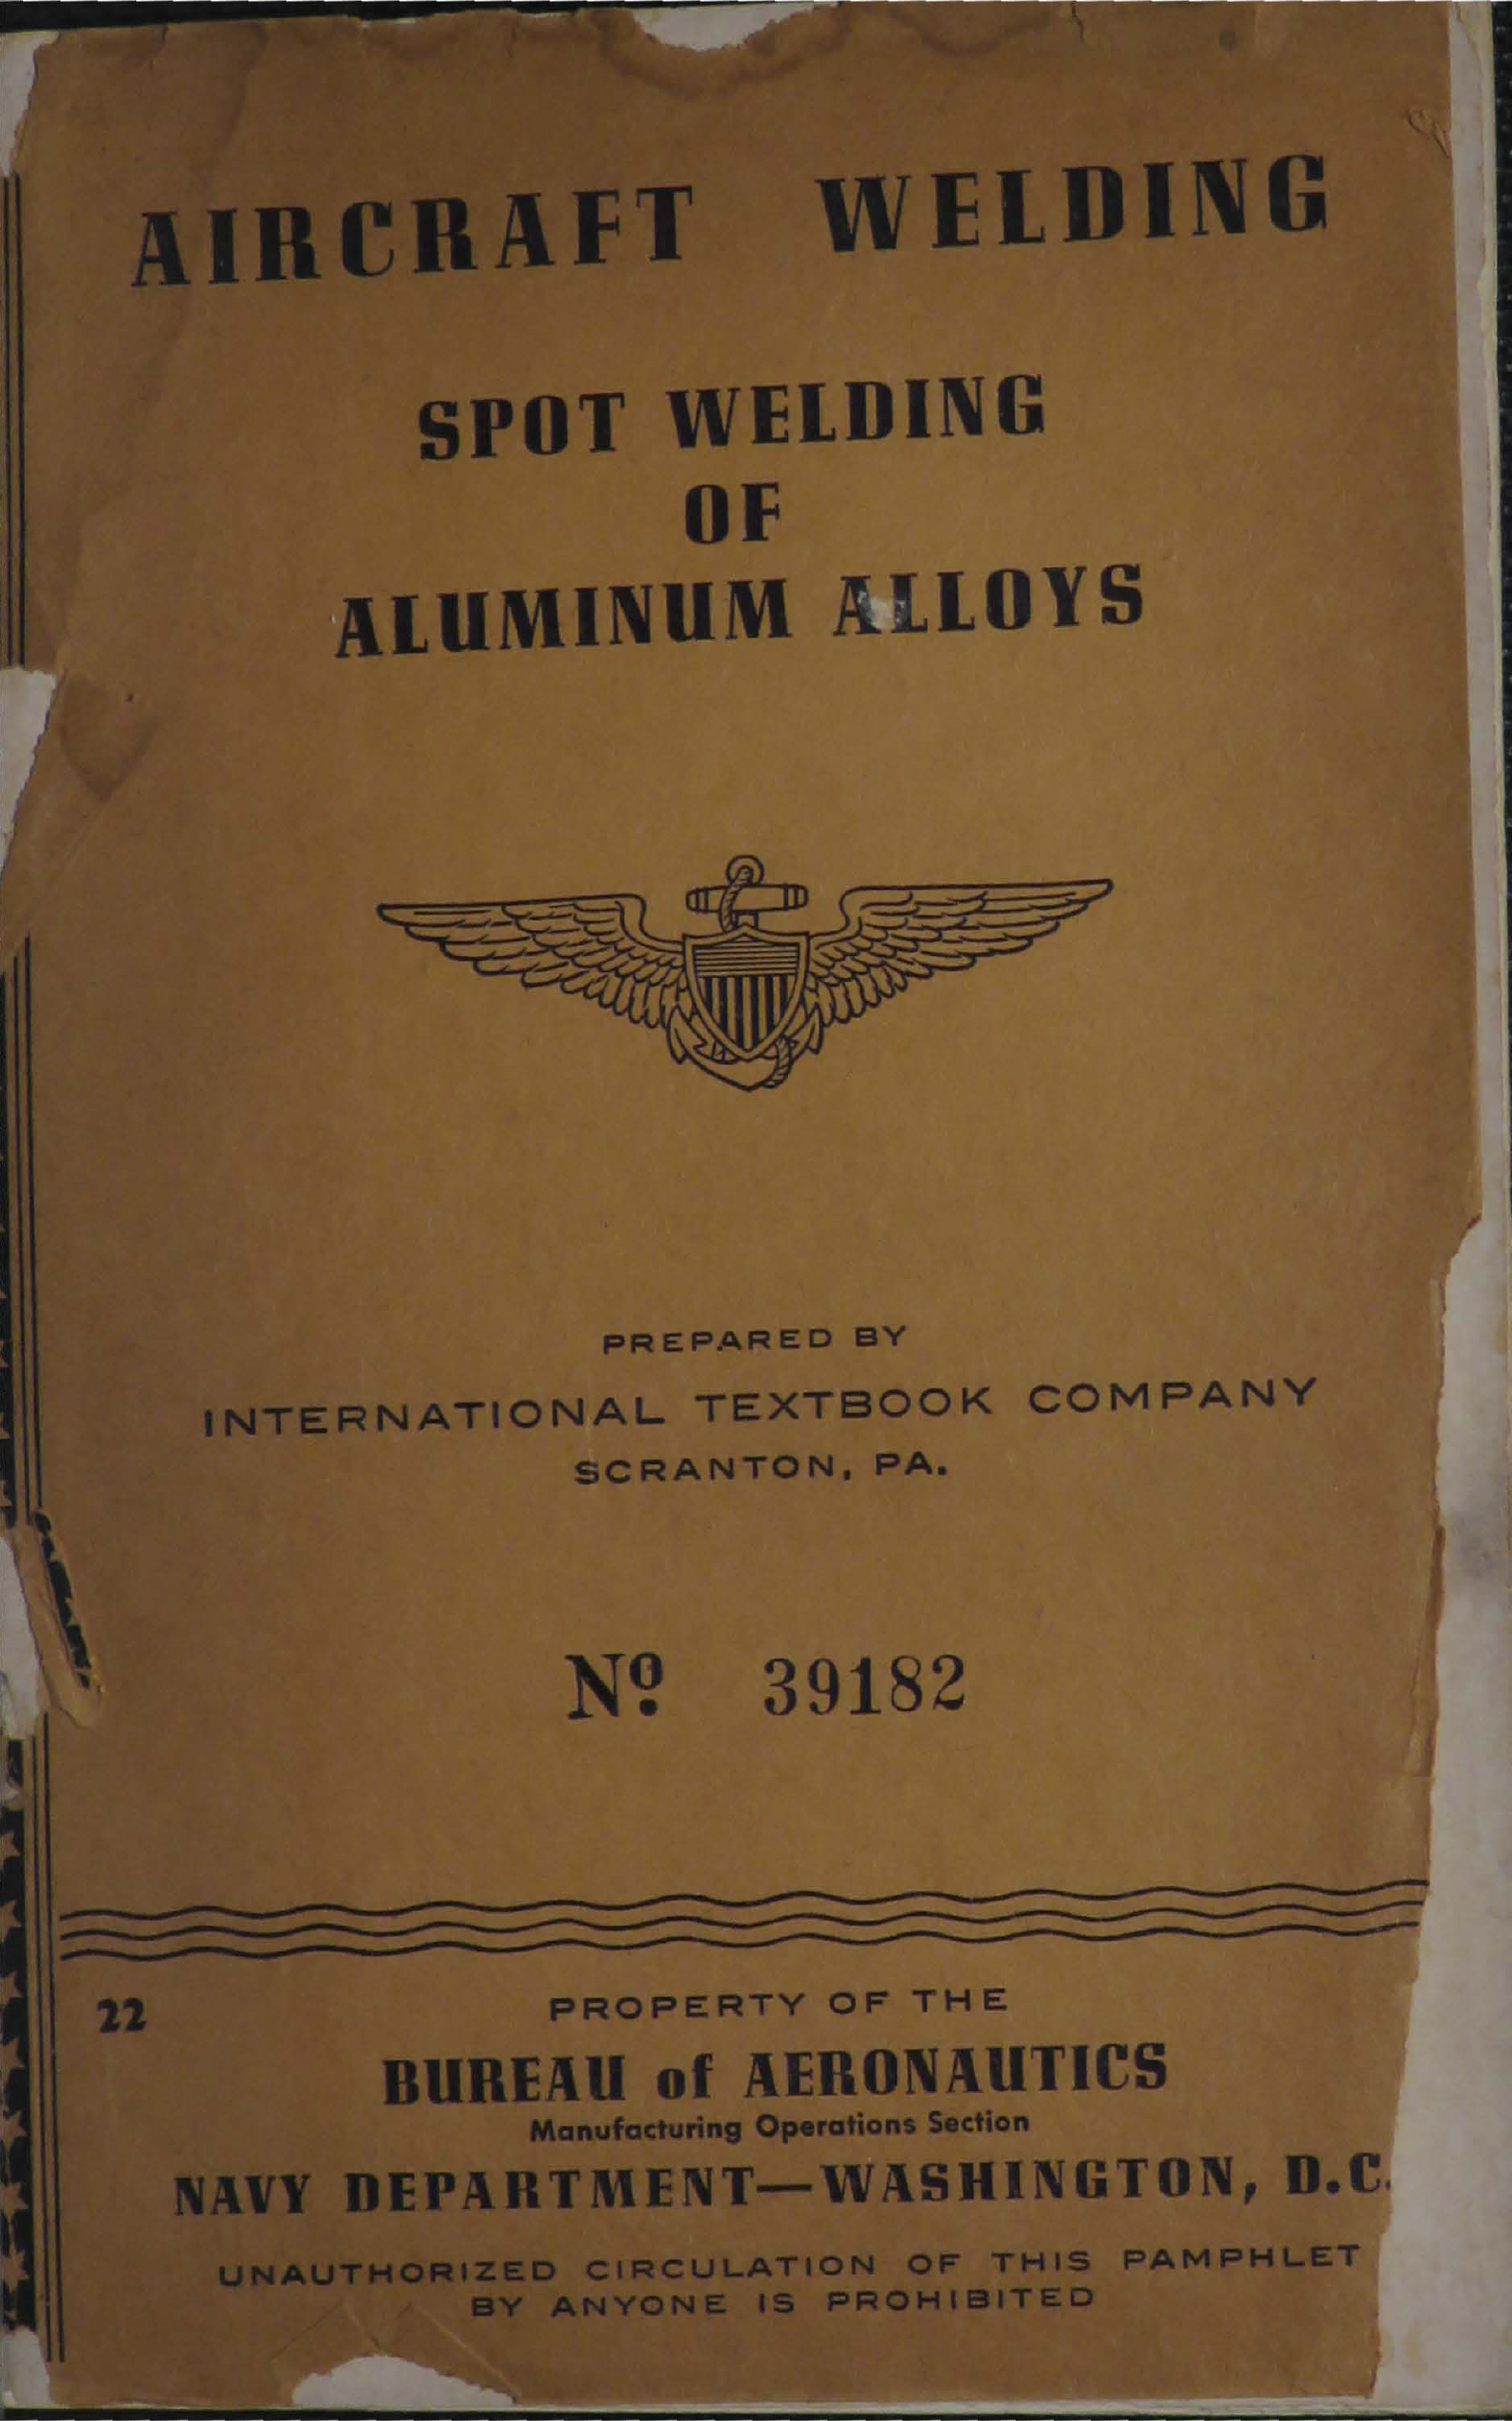 Sample page 1 from AirCorps Library document: Aircraft Welding - Spot Welding of Aluminum Alloys - Bureau of Aeronautics